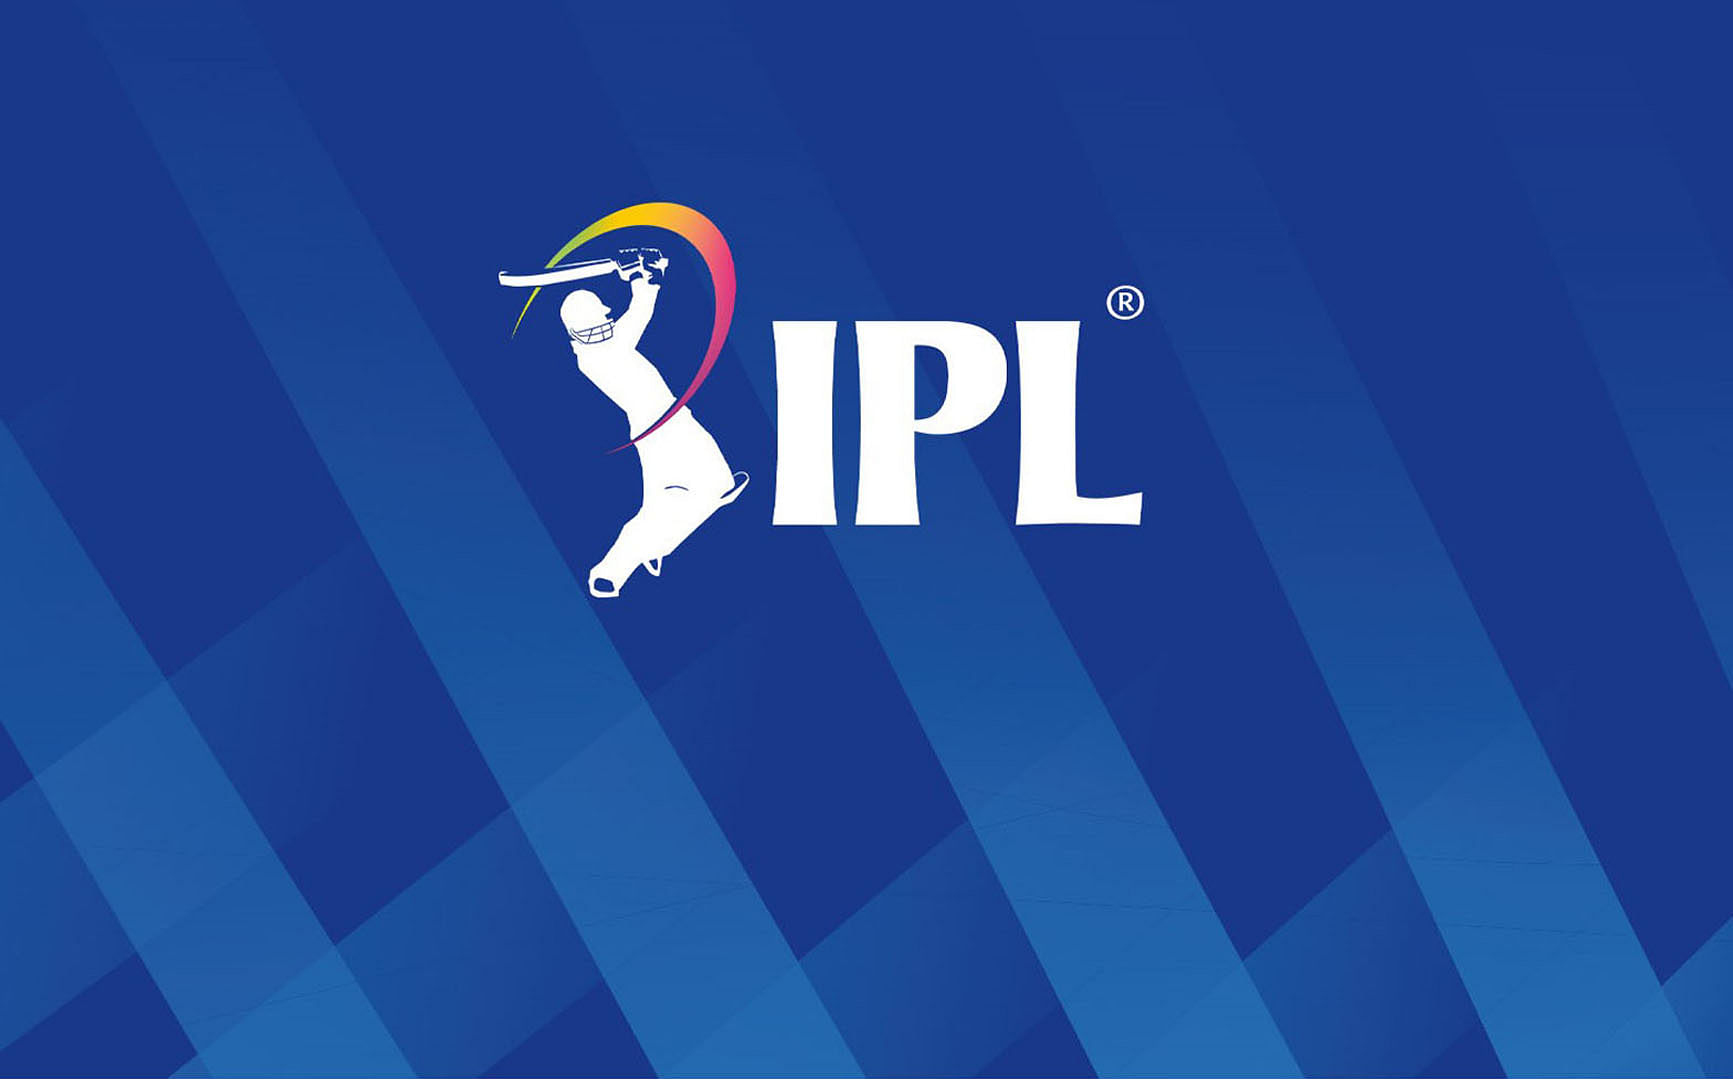 Badrinath, Irfan and Harbhajan Share Their First Impression of Virat Kohli  | IPL Heroes - YouTube